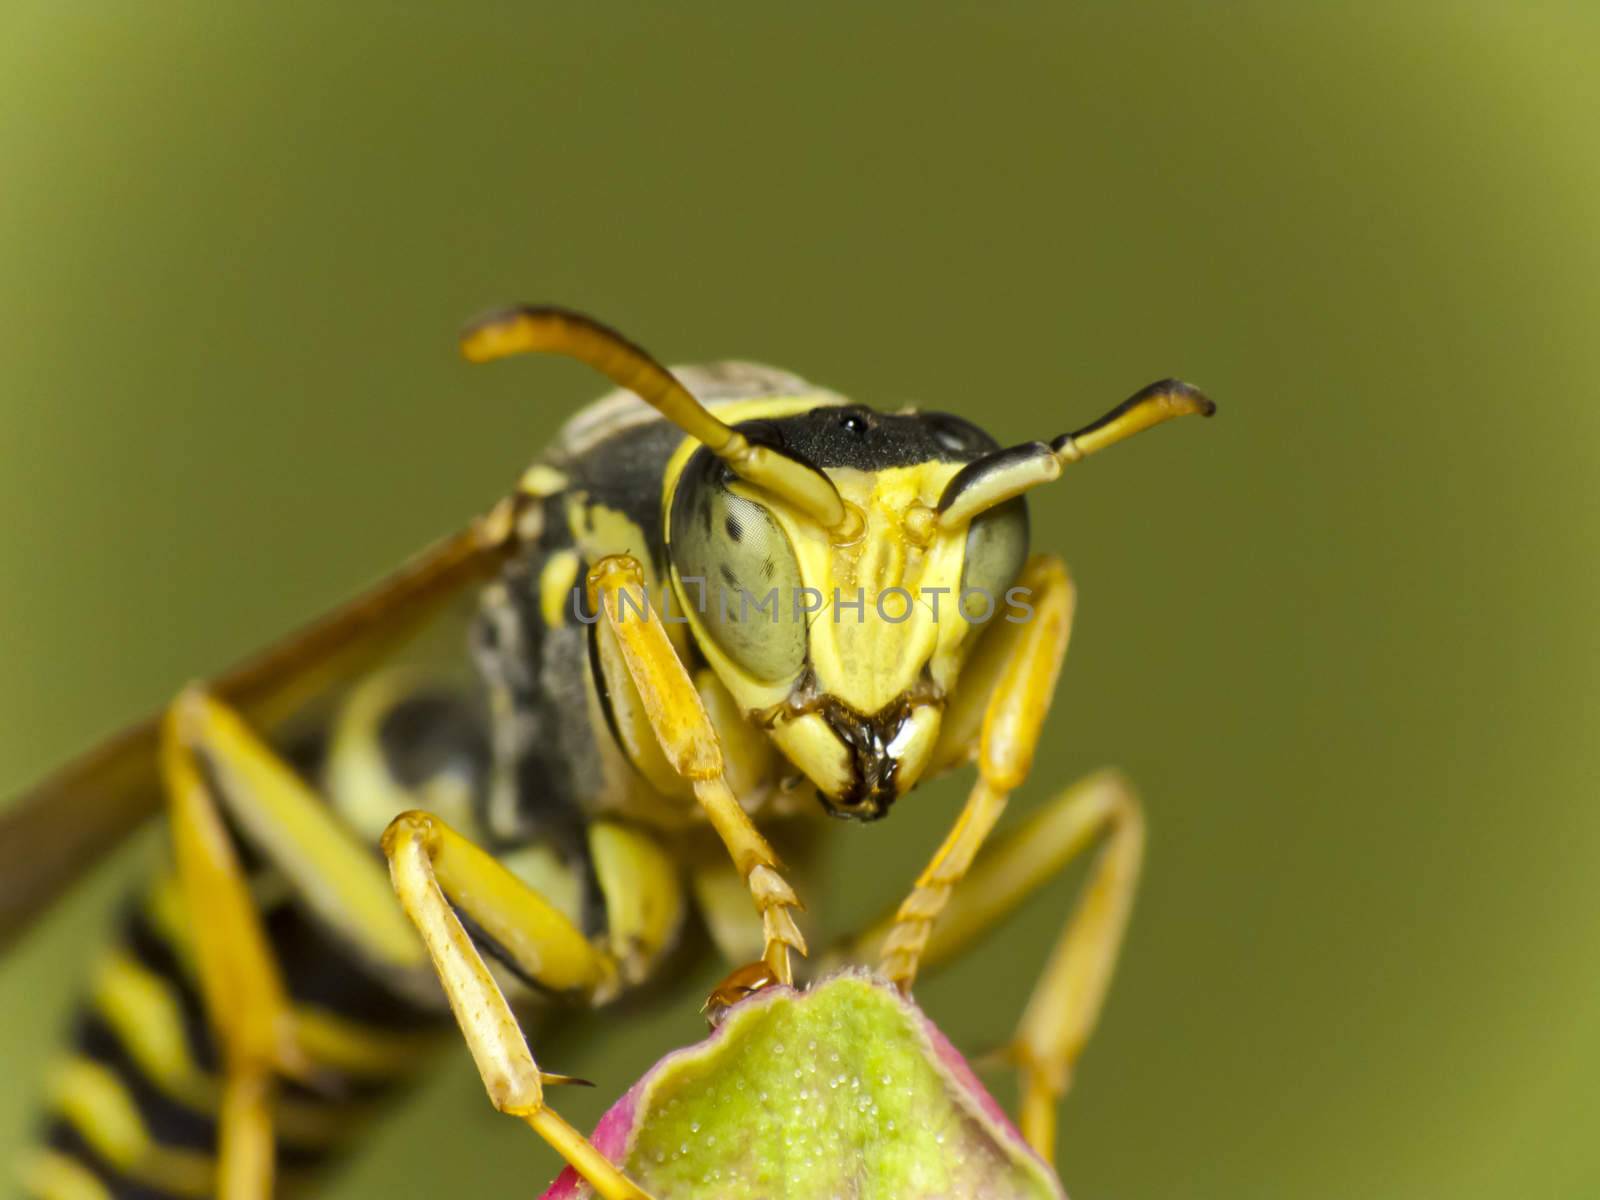 Wasp head by Kidza